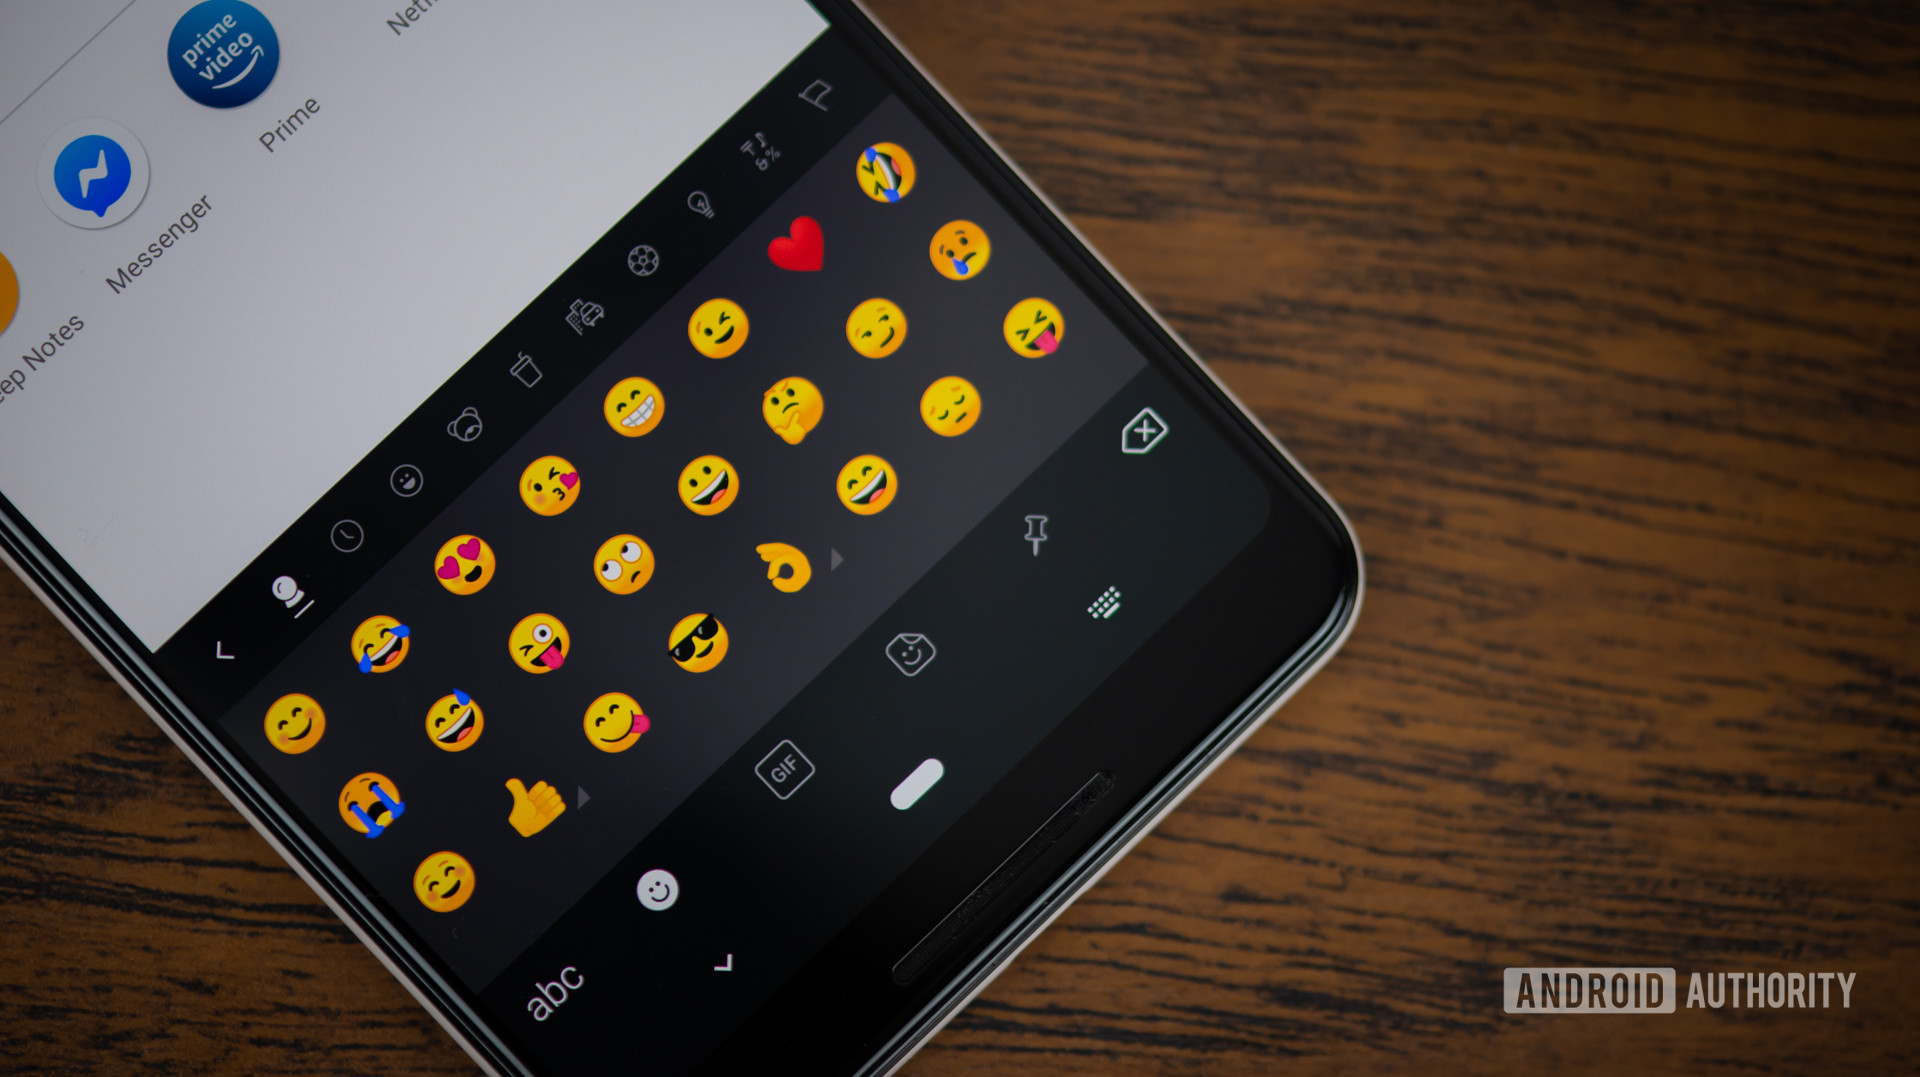 Swiftkey Emojis shown on Google Pixel 3 XL